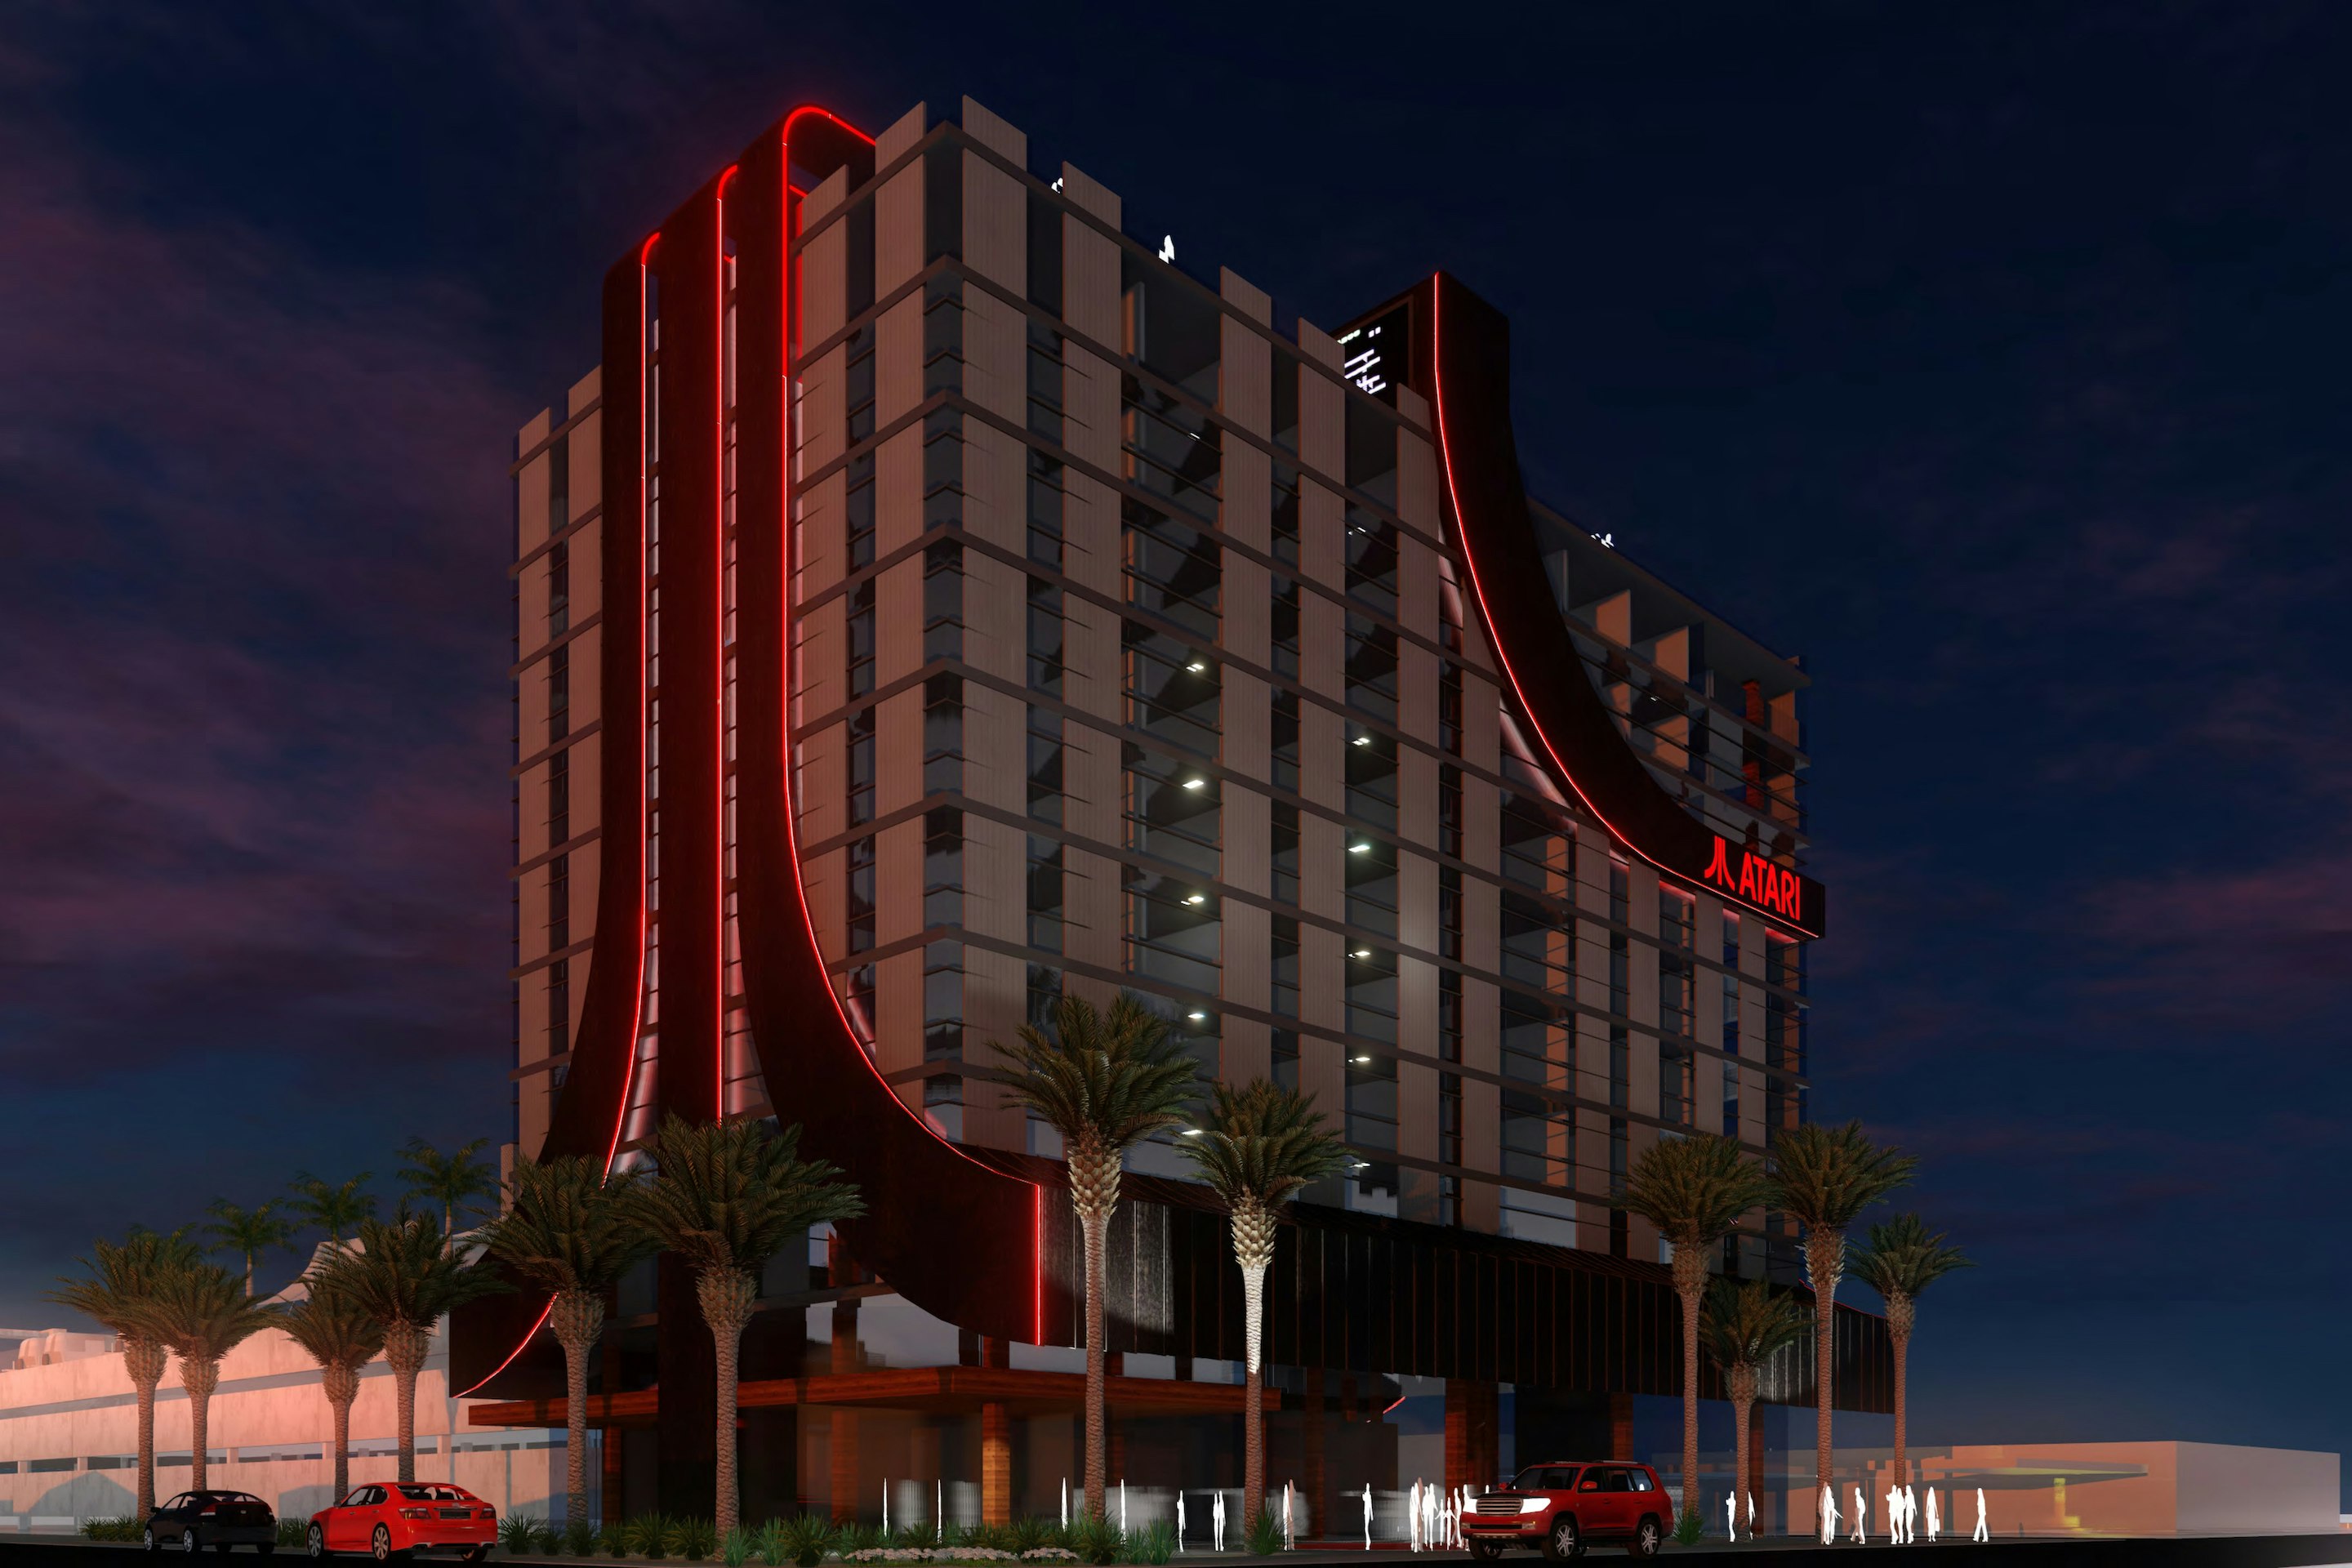 Rendering of the new Atari hotel at night